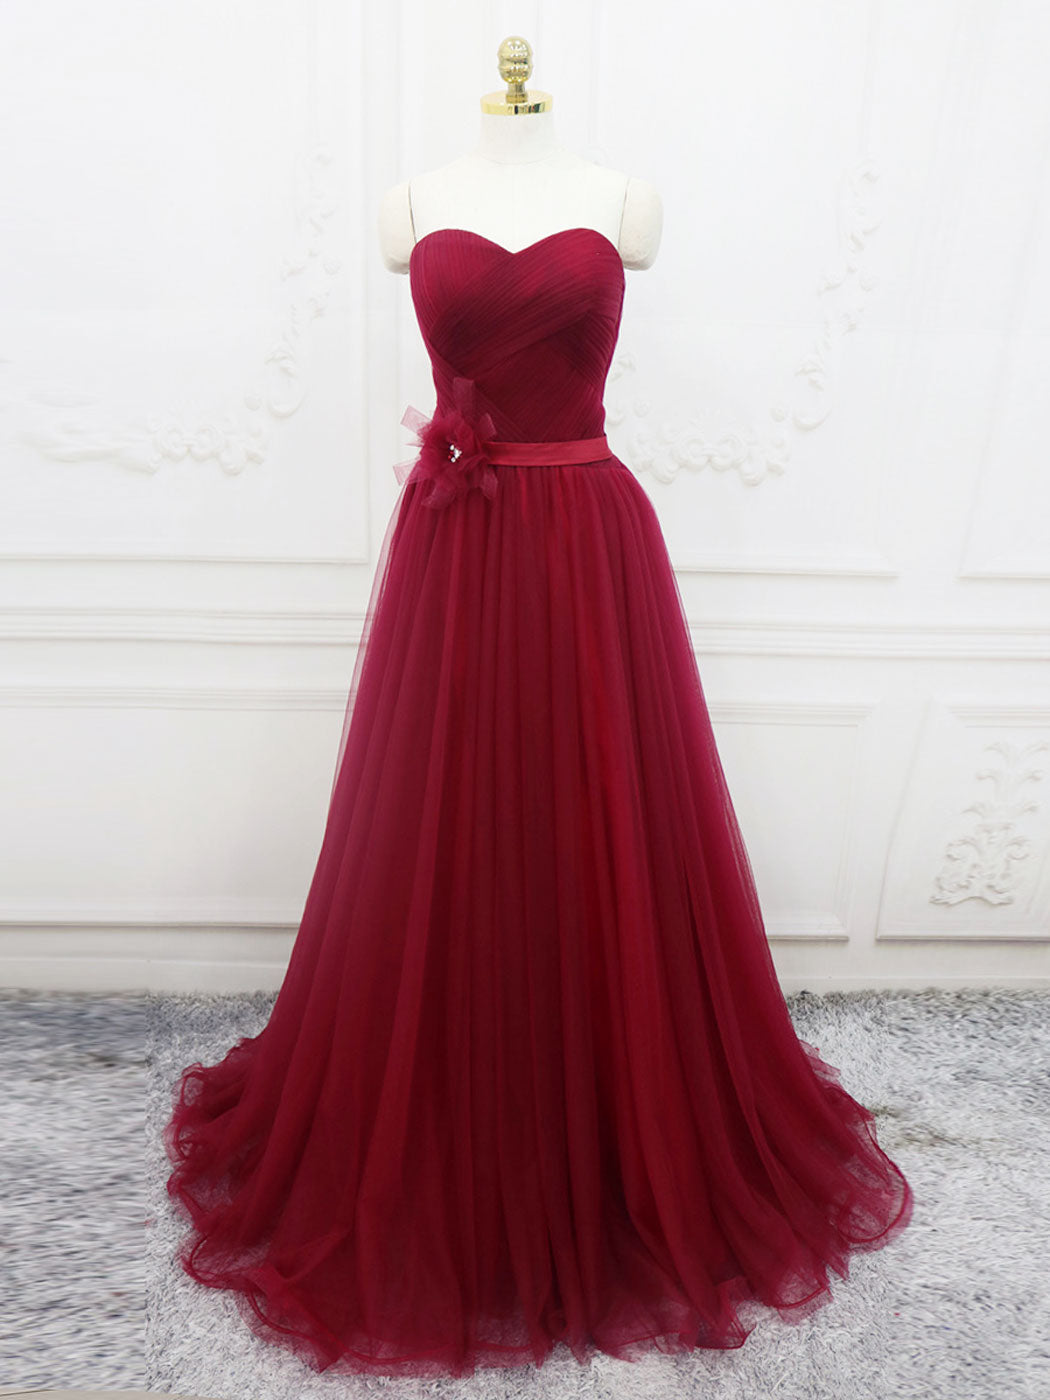 Dress Outfit, A-Line Sweetheart Neck Burgundy Long Prom Dress, Burgundy Bridesmaid Dress